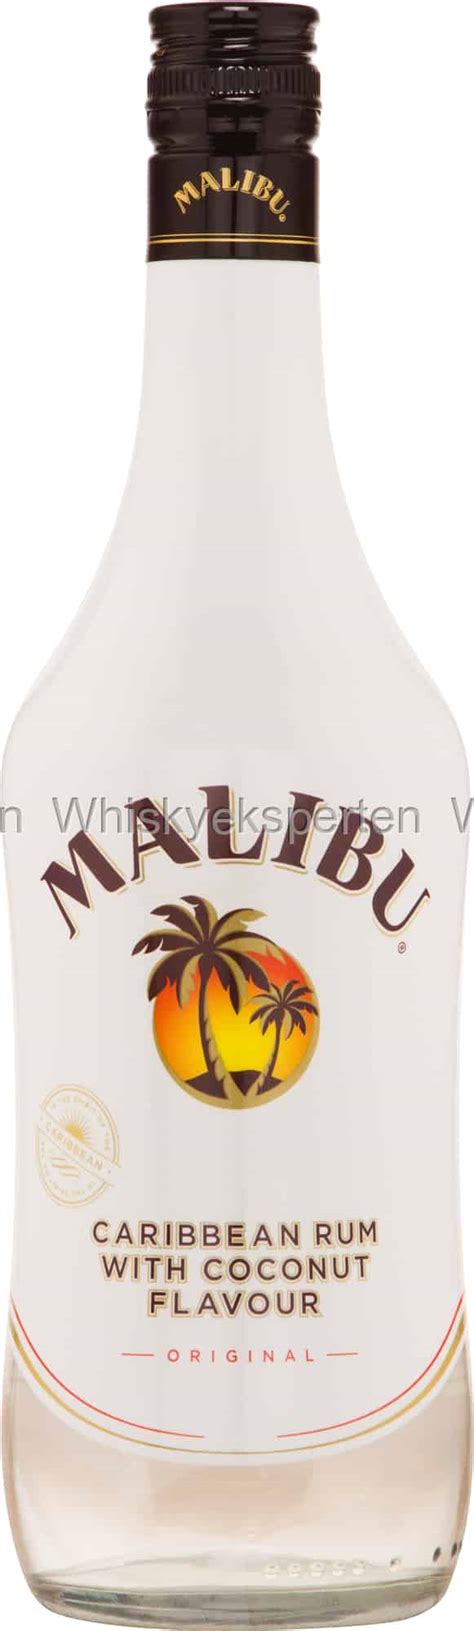 Malibu original carribean rum with coconut liqueur. Malibu | Caribbean Rum With Coconut Flavour